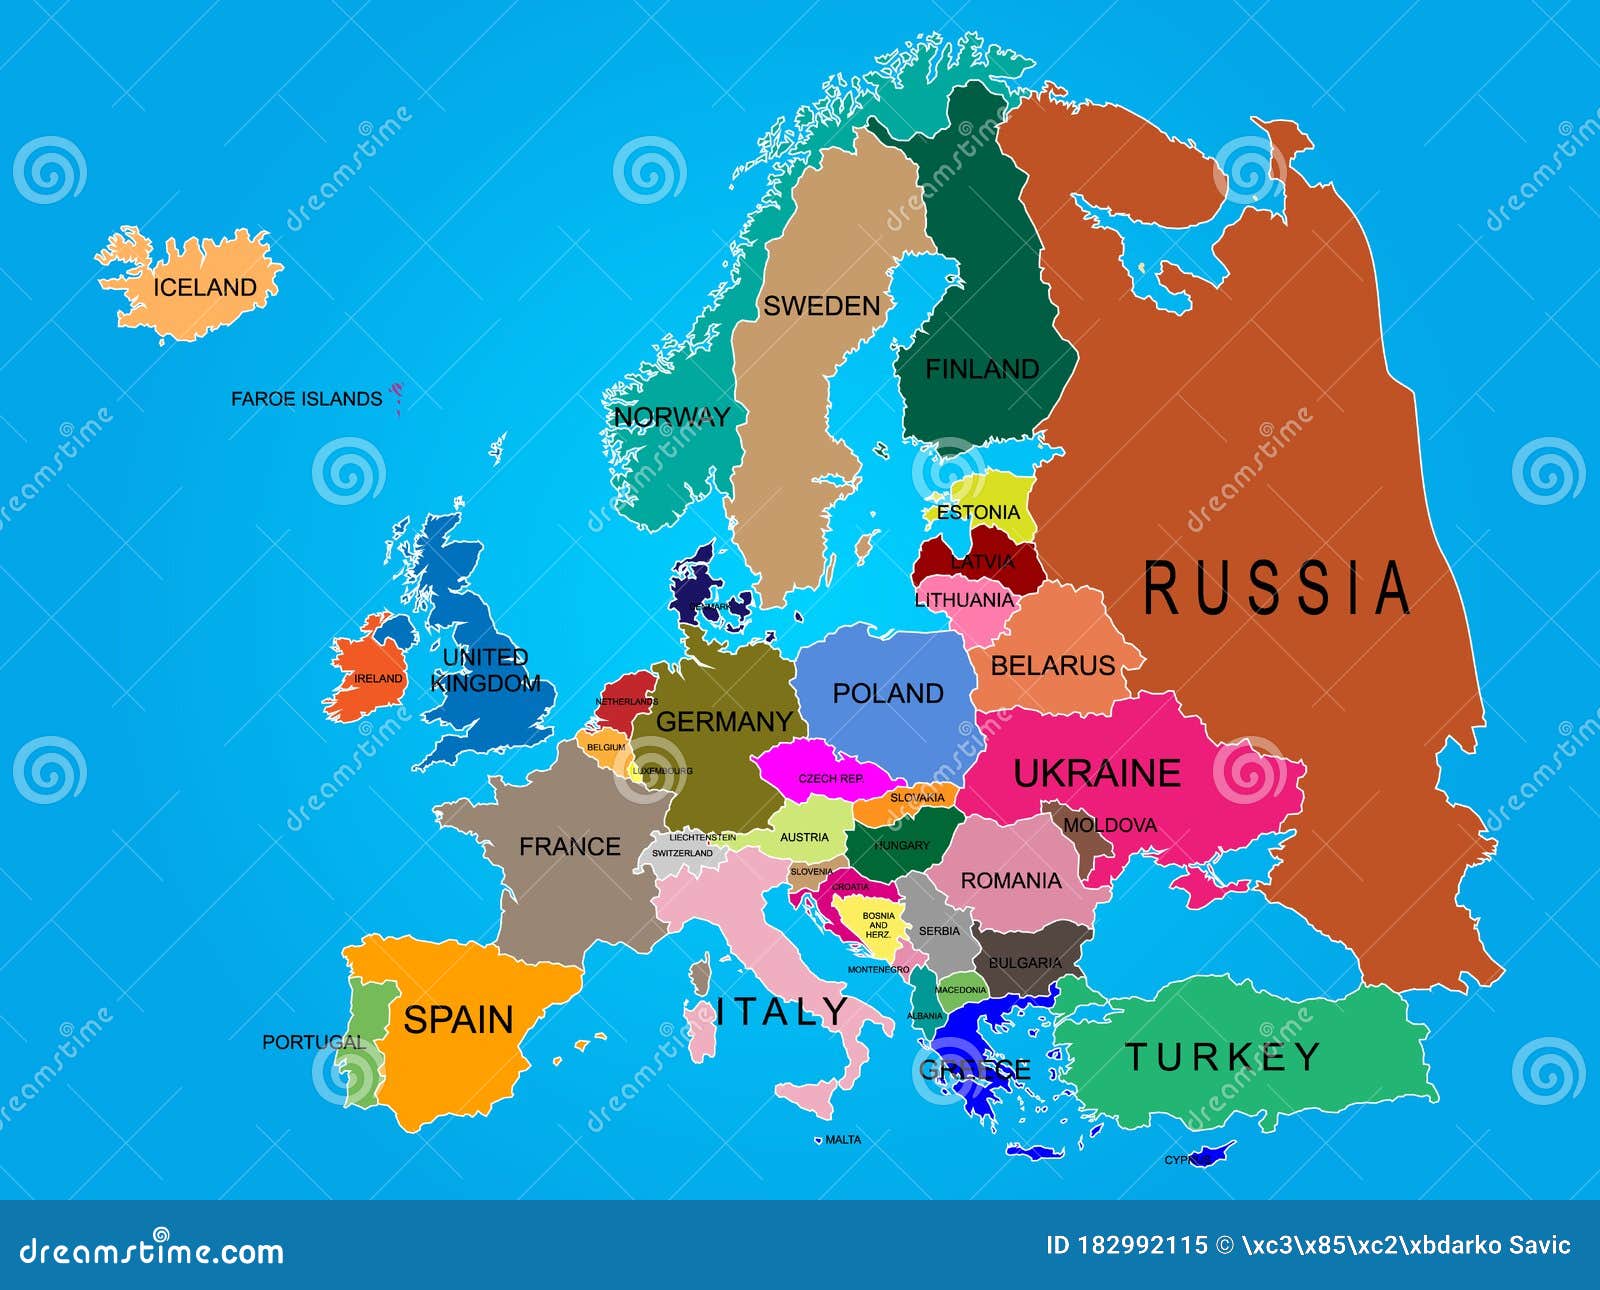 Balkanske zemlje stvorile savez protiv Srbije i BiH - Page 4 Europe-map-country-names-vector-illustration-europe-map-country-names-vector-illustration-suitable-print-web-design-182992115